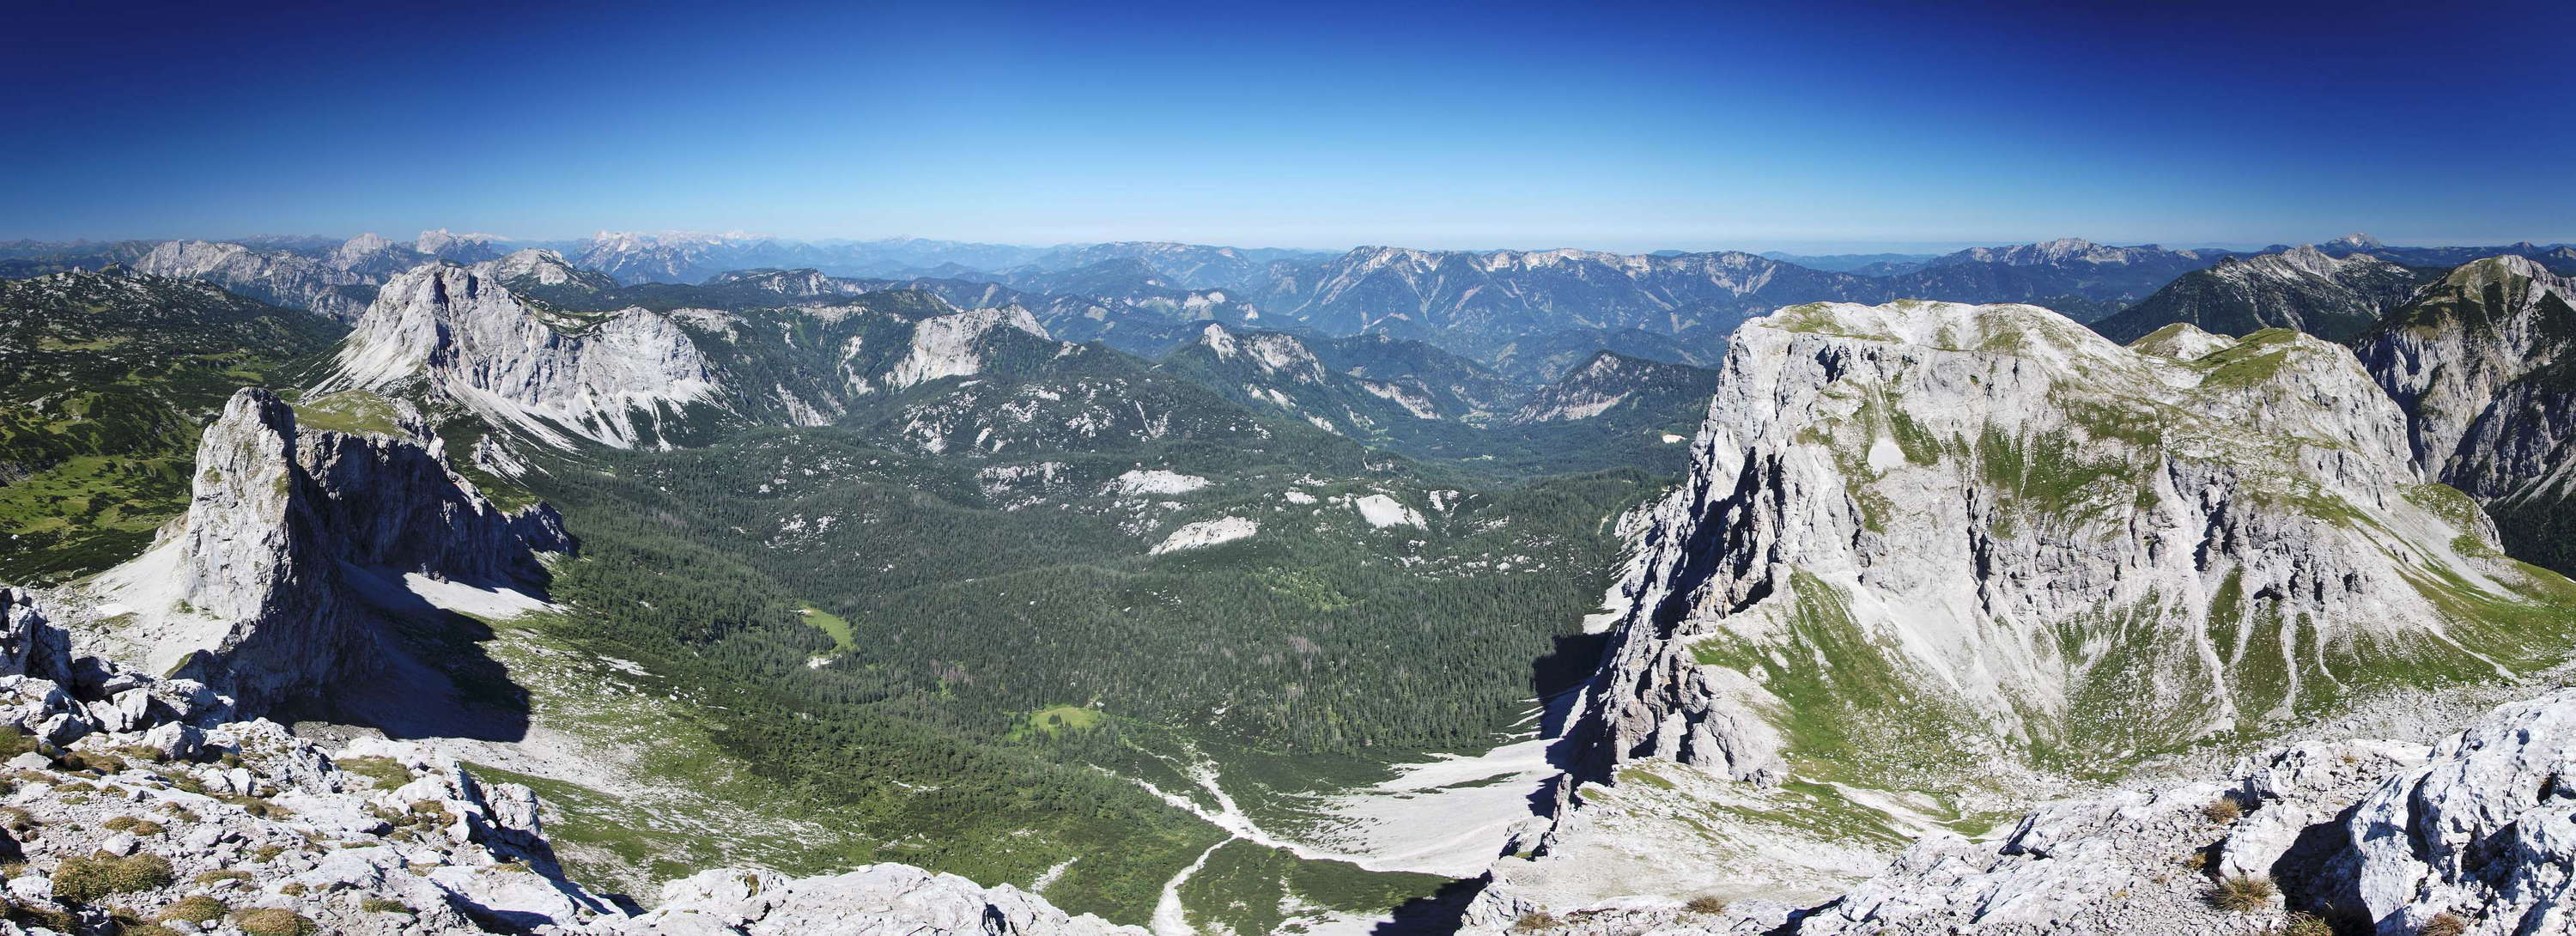 Wildalpen Rock Slide panorama